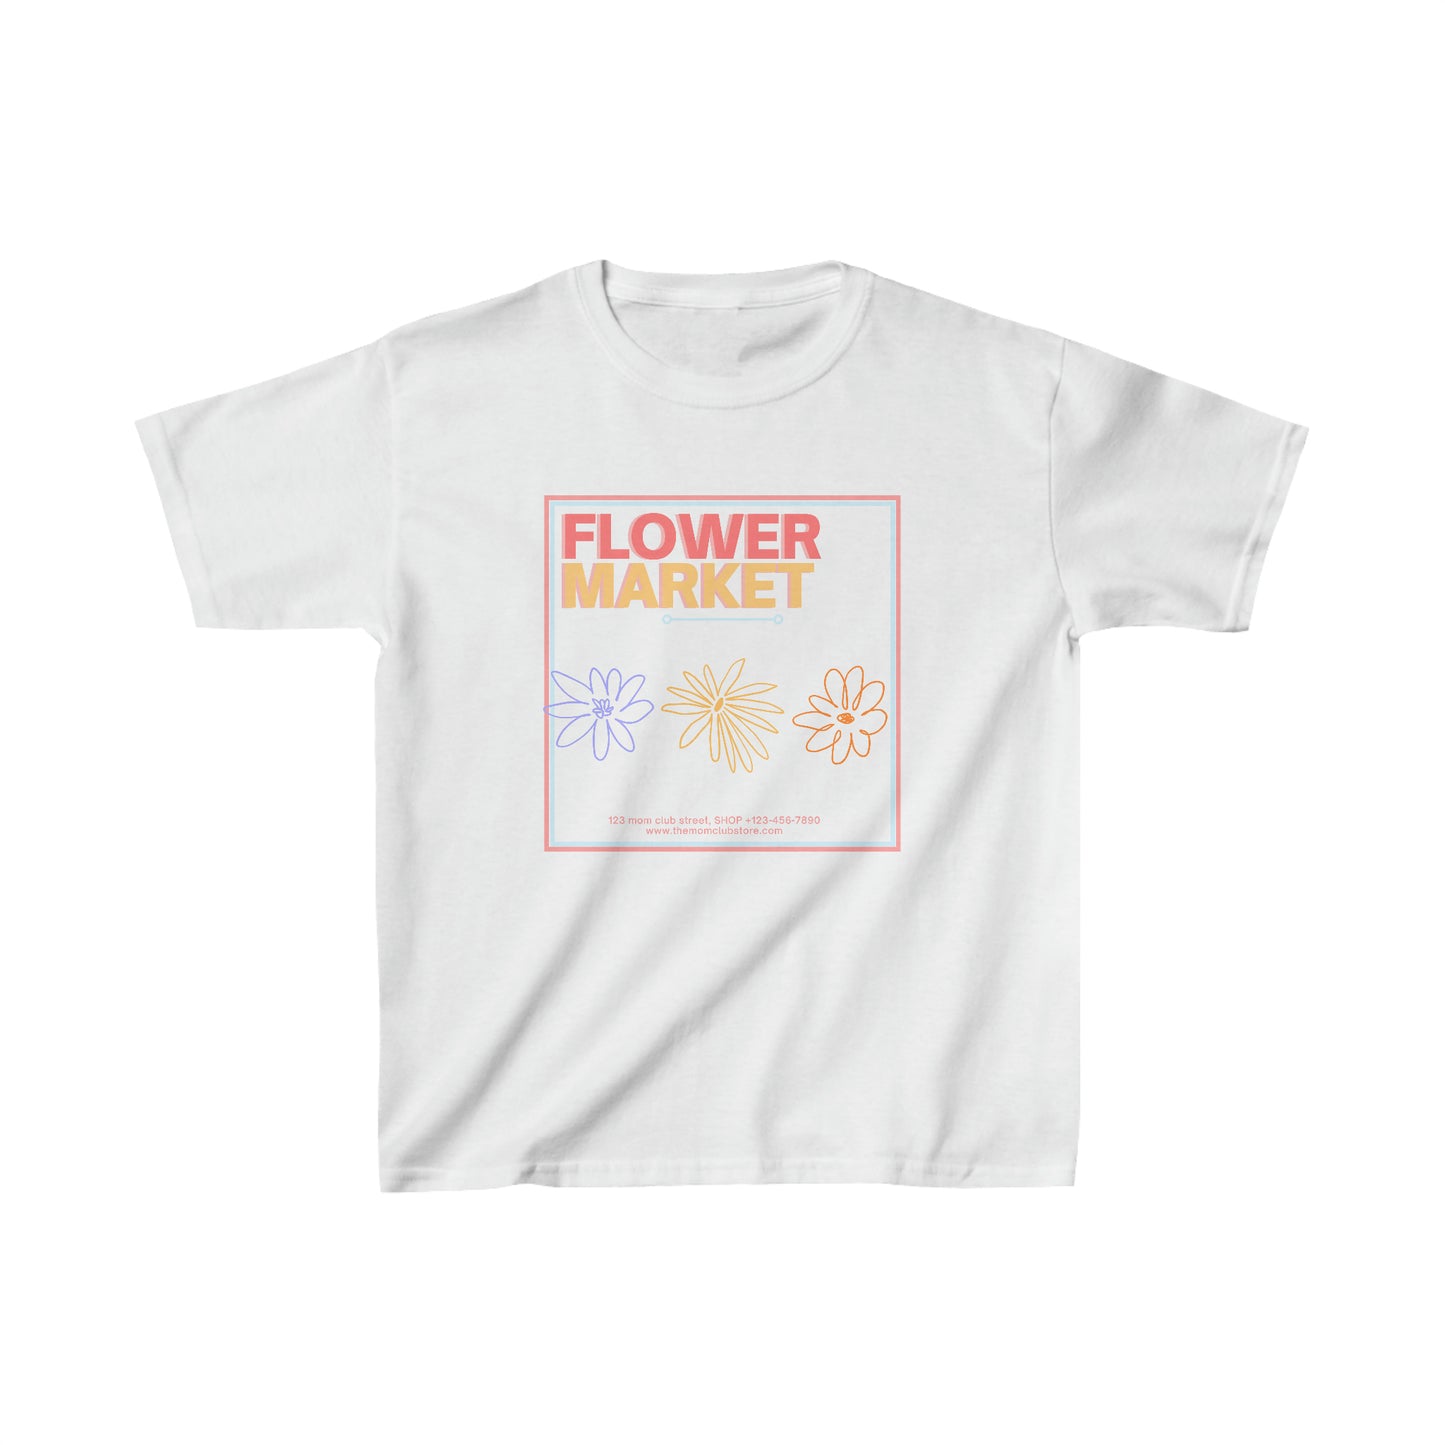 FLOWER MARKET t-shirt - child